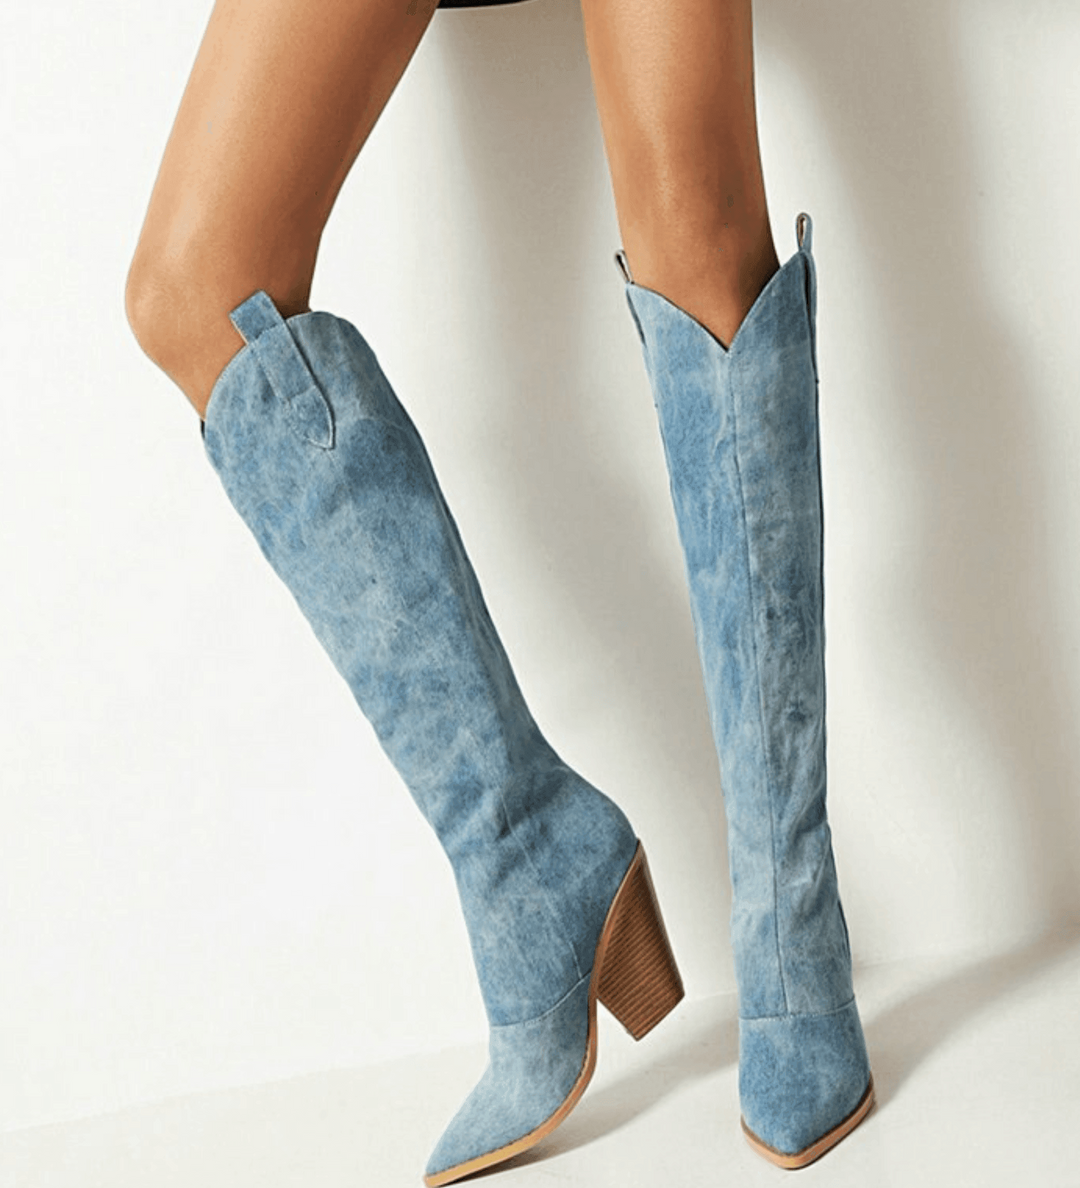 Anna Feld Laarzen | Elegante kniehoge suede-look licht blauwe damesschoenen